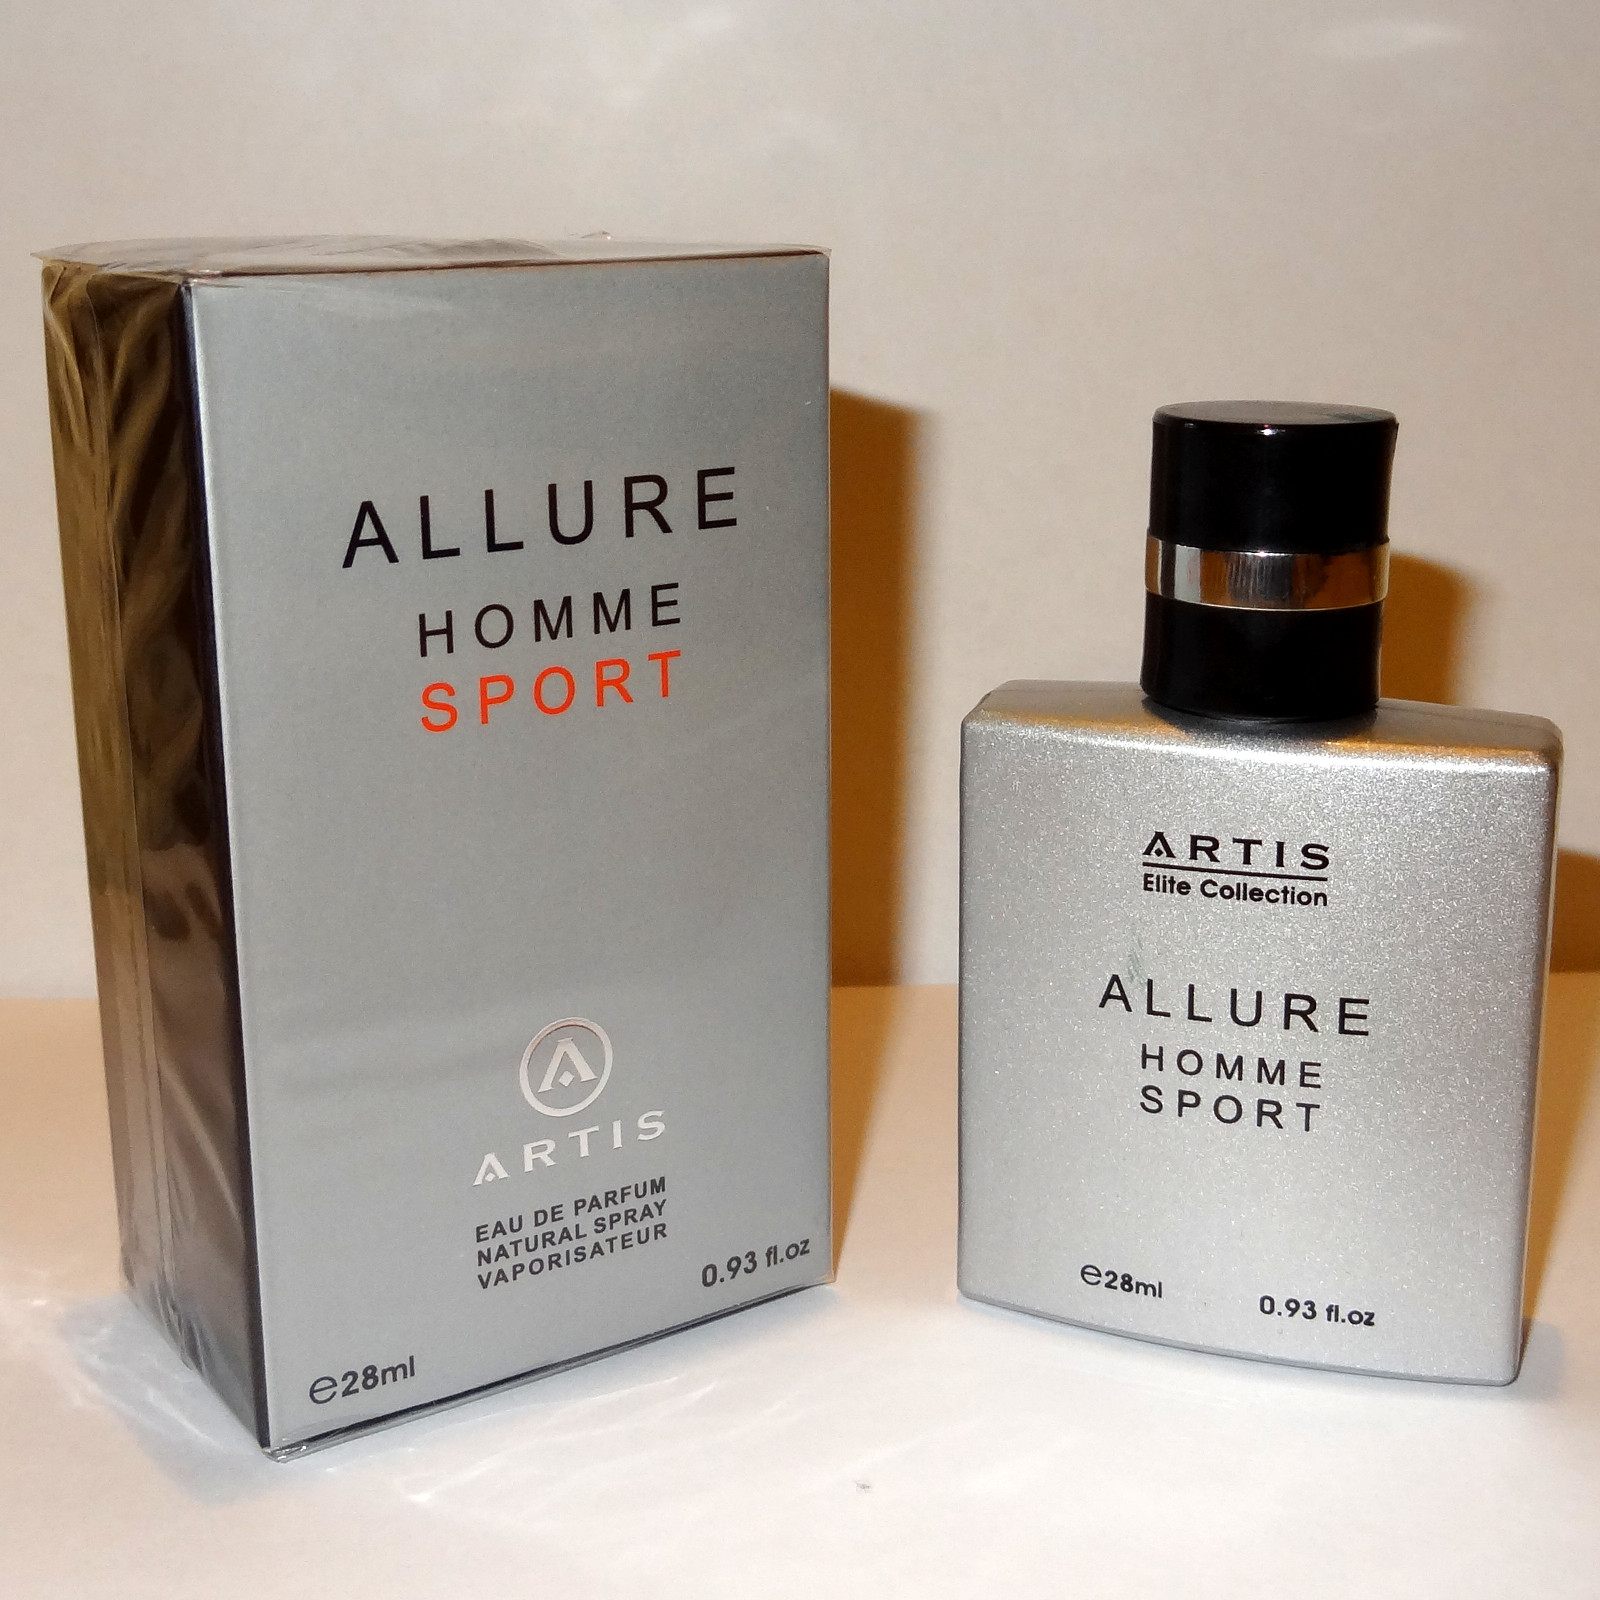 Allure homme sport оригинал. Artis homme Sport. Мужская парфюмерная вода 25 ml ОАЭ Chanel Allure homme Sport. Туалетная вода Чао.